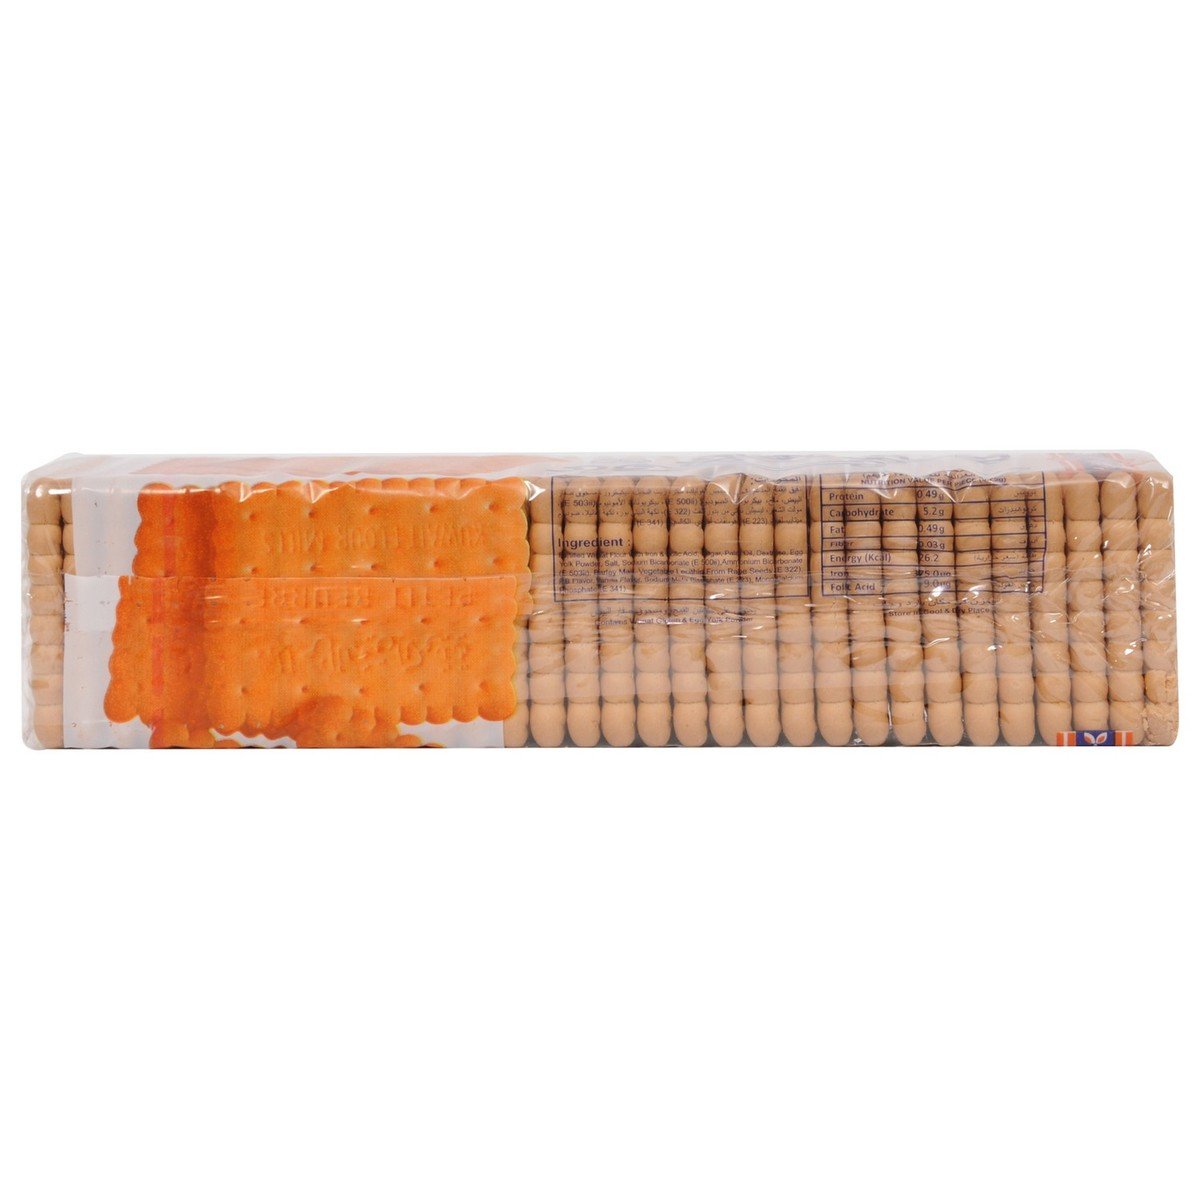 KFMBC Petit Beurre Biscuits 12 x 200 g